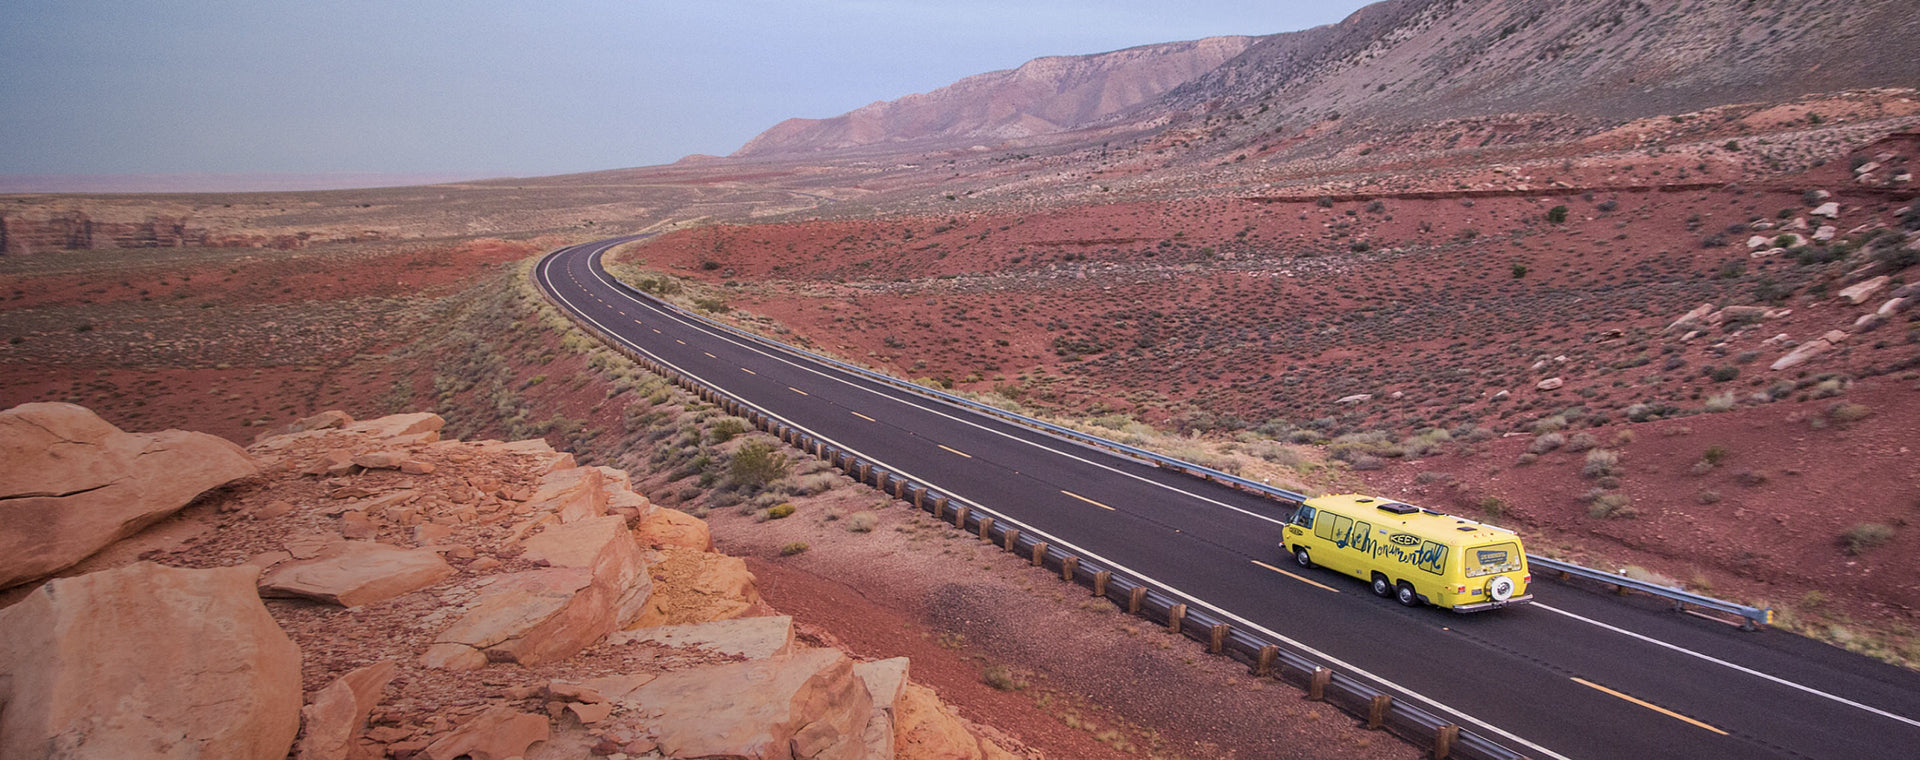 Yellow Keen bus driving through red, mountainous desert landscape